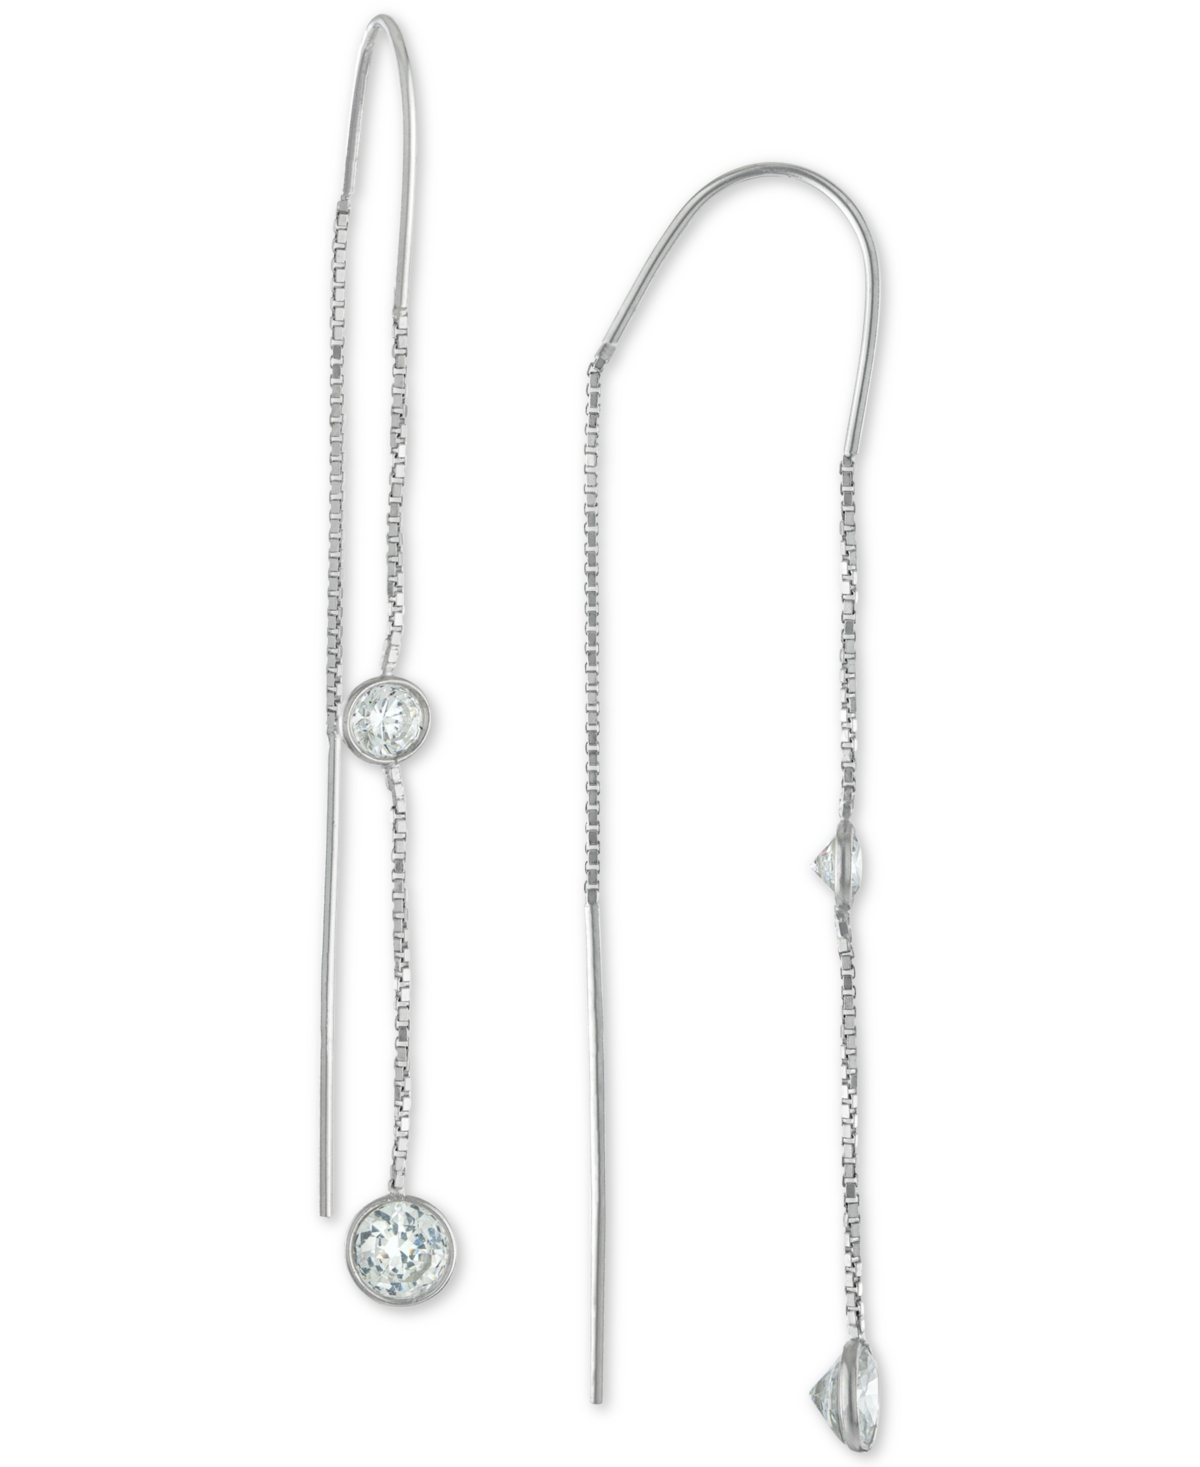 Giani Bernini Cubic Zirconia Bezel Threader Earrings in Sterling Silver, Created for Macy's